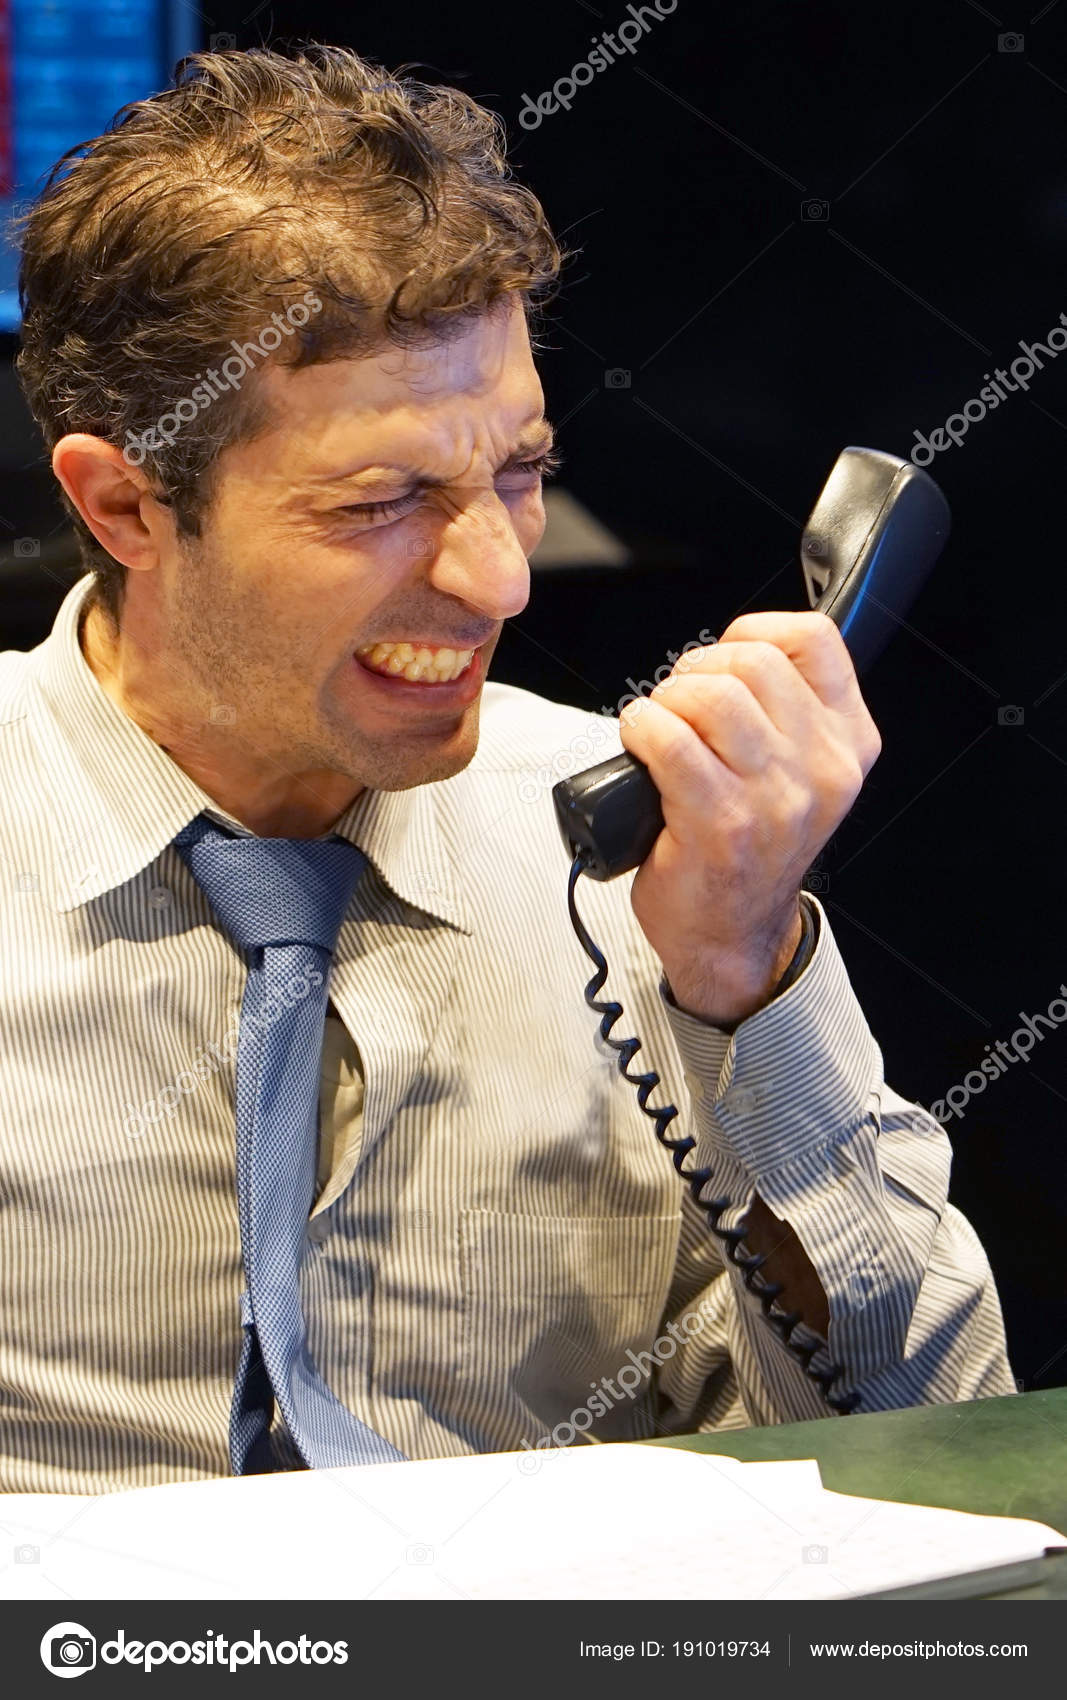 Secretary answering phone calls Stock Photo by ©svershinsky 191019734